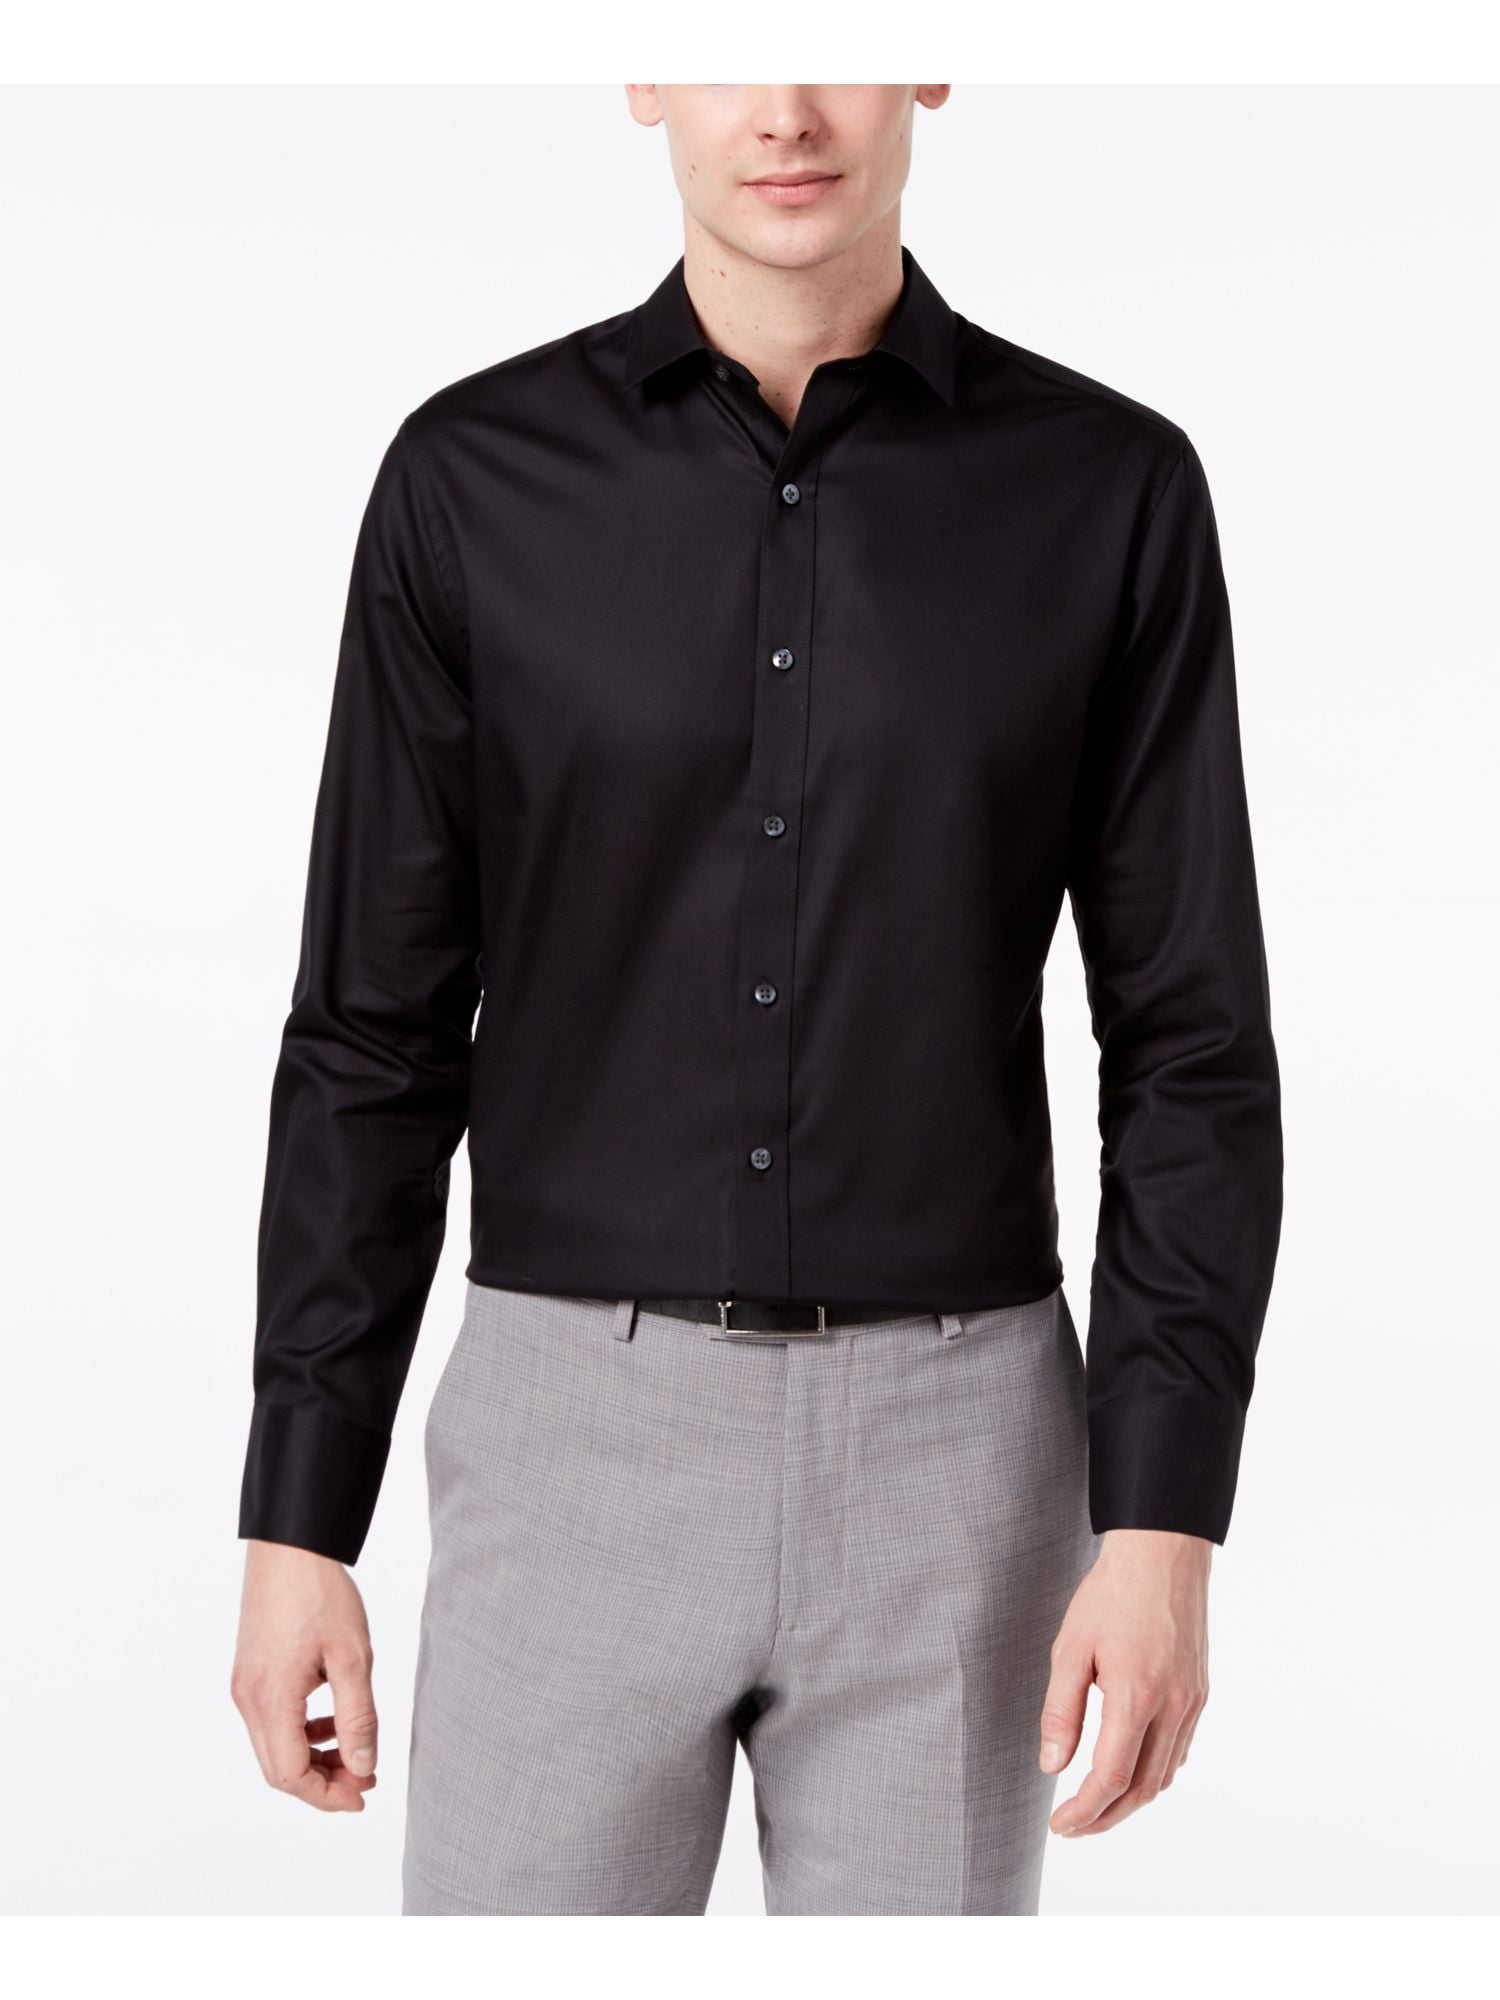 $119 Bar Iii 16-16.5 34/35 Mens Slim-Fit Stretch Black White Button Dress Shirt